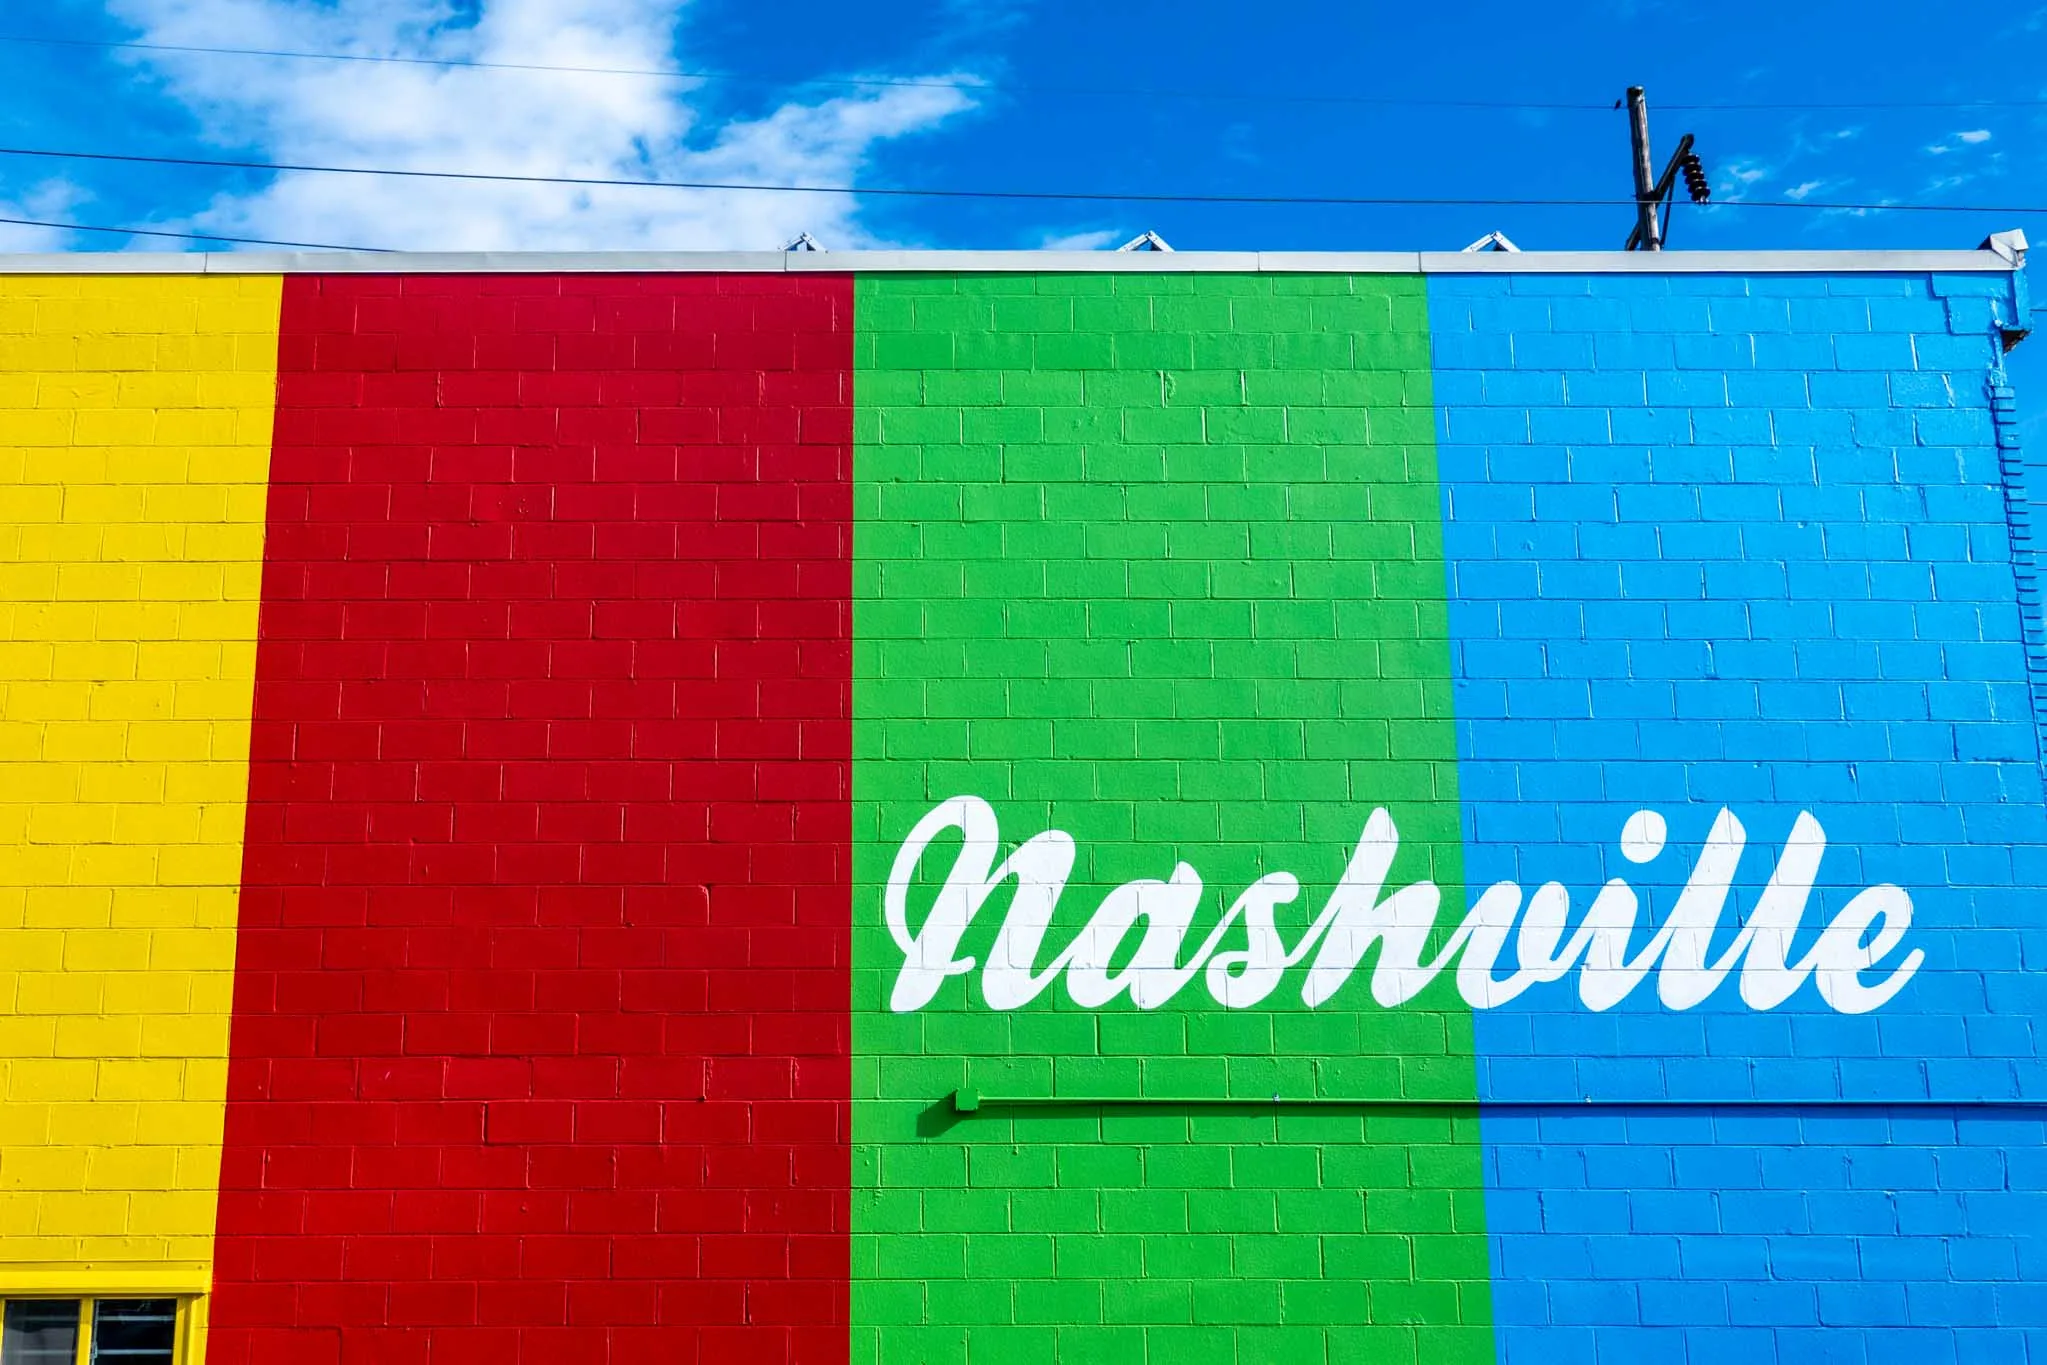 Color bar street art mural in Nashville Tennessee